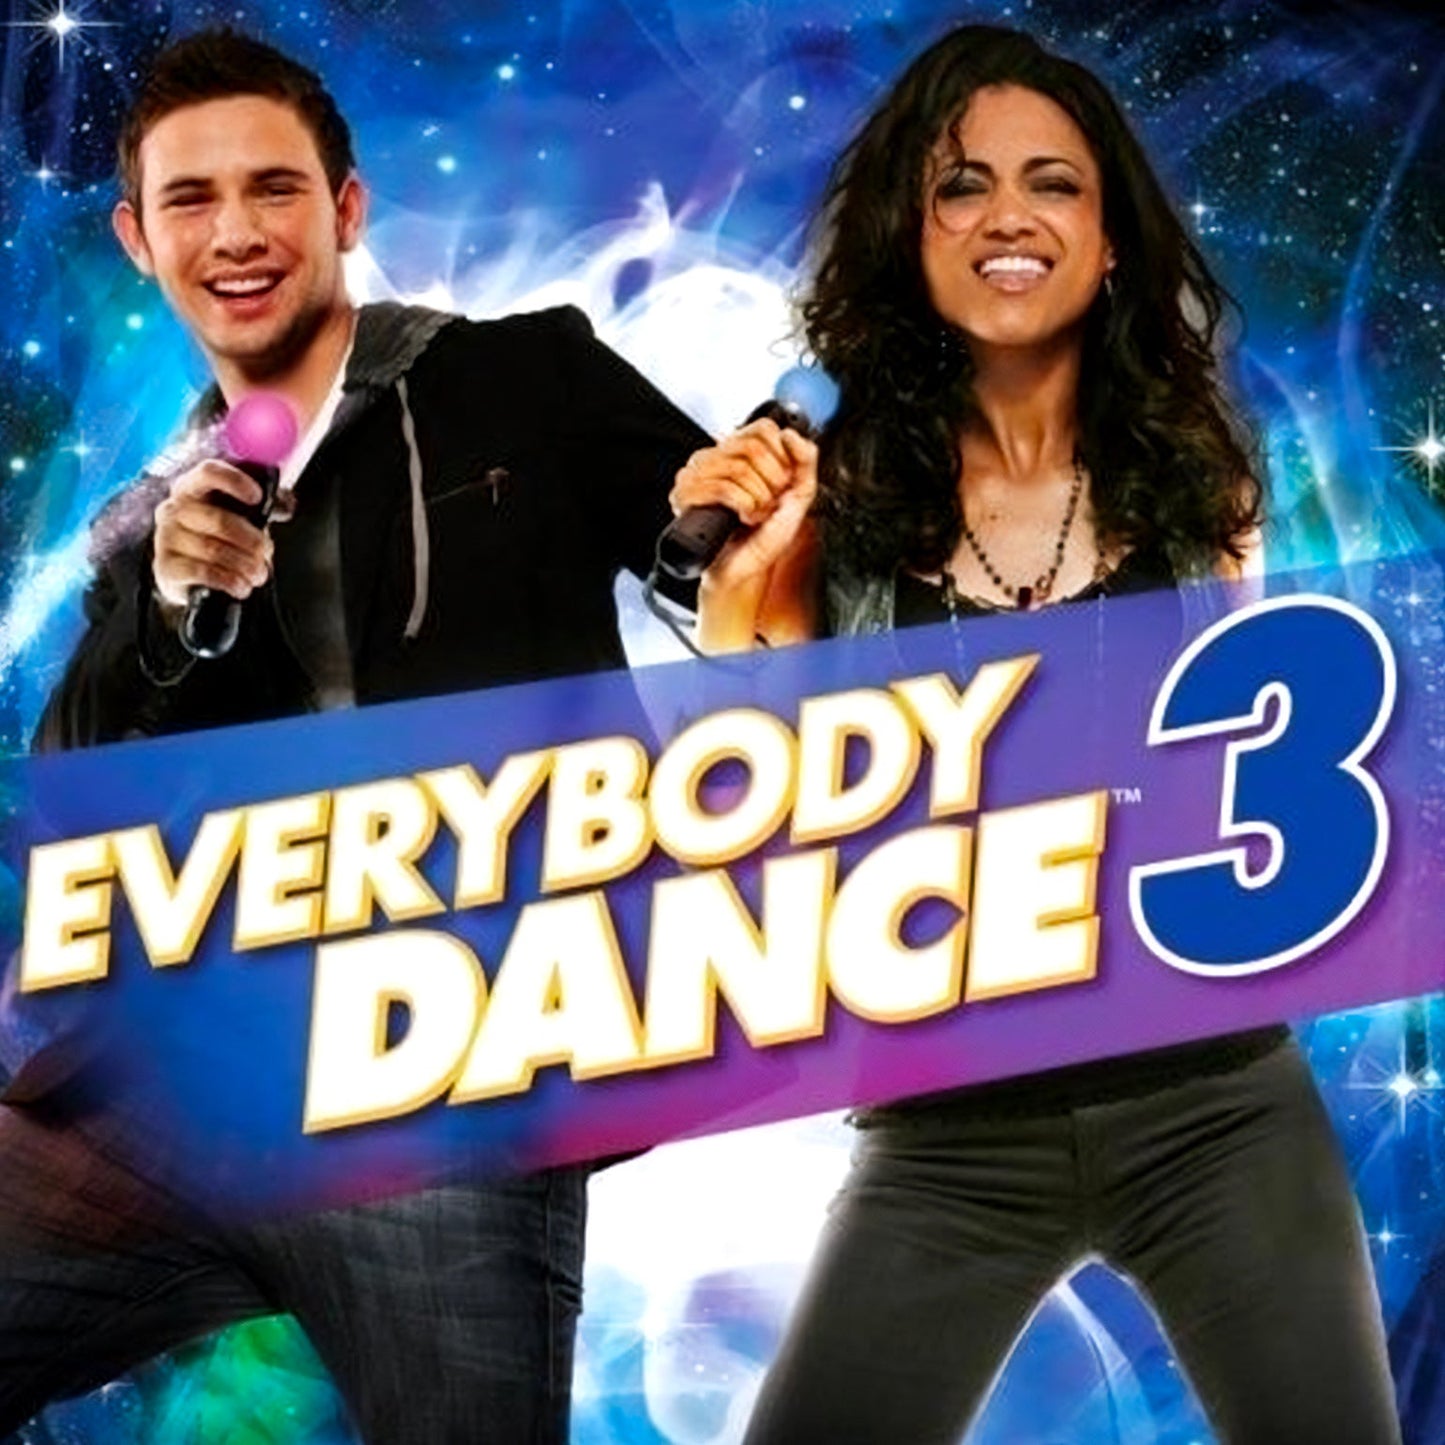 Everybody Dance 3 [Latin American Import] (Playstation 3)